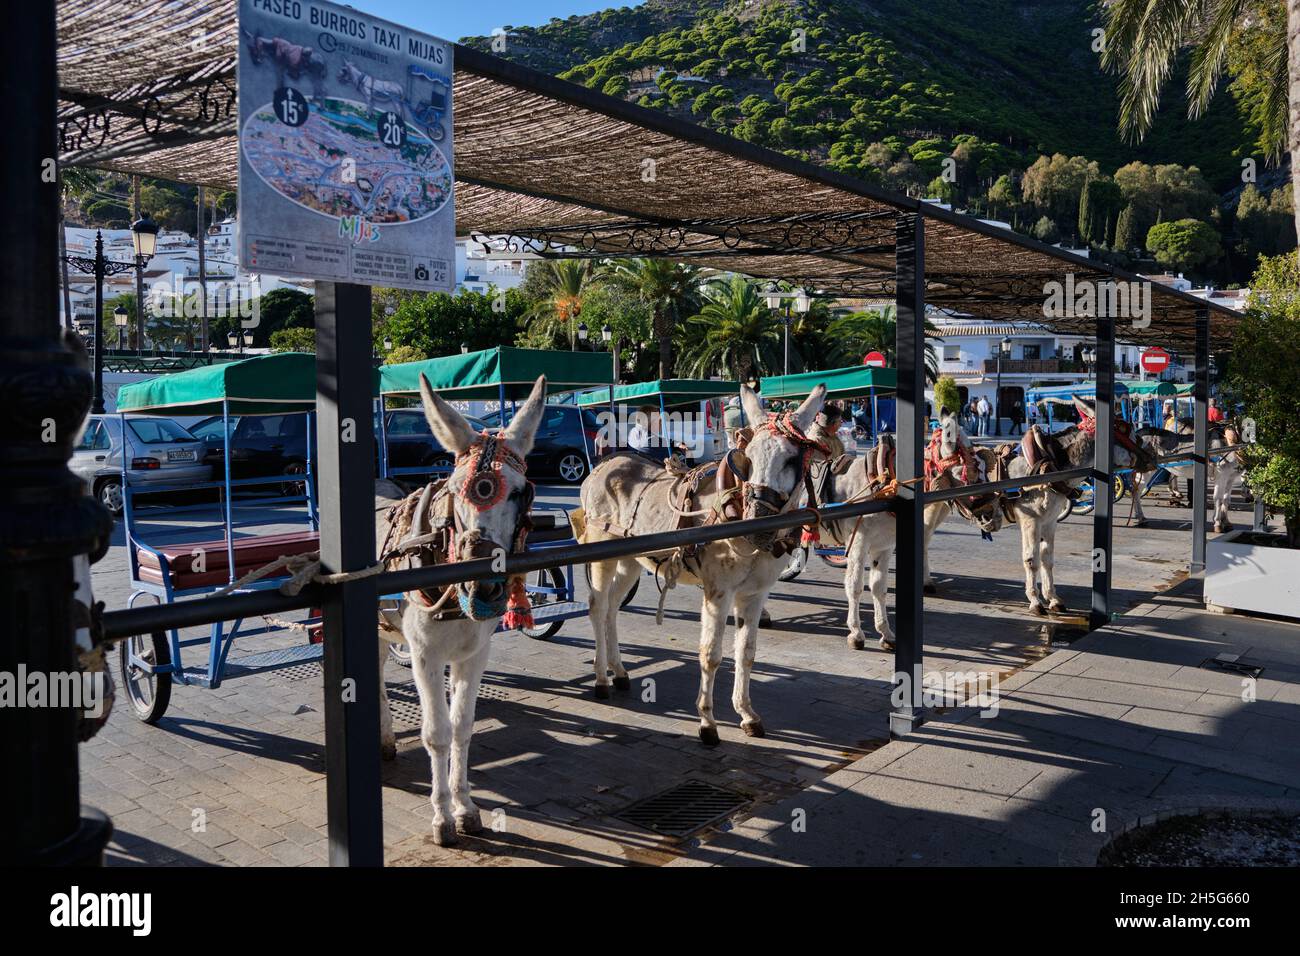 Donkeys - Burro Taxi, Mijas Pueblo, Malaga province, Andalusia, Spain. Stock Photo